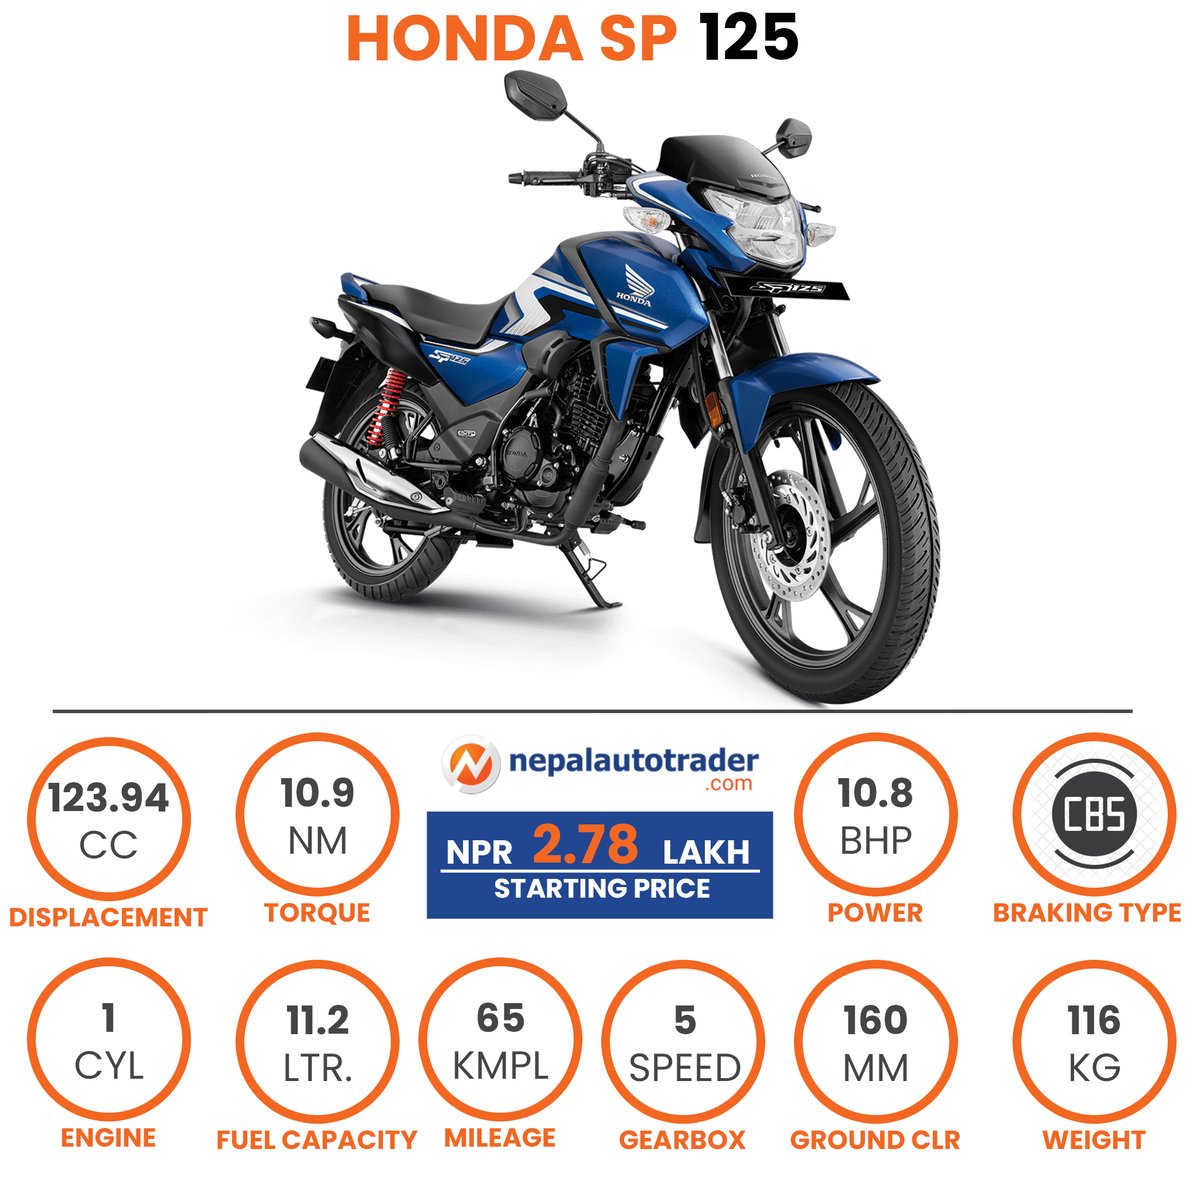 Honda SP125 Quick Specifications. #Autonews #AutonewsNepal #Bikes #BikesNepal #HondaBikes #HondaNepal #HondaSP #HondaSP125 #Nepalautotrader